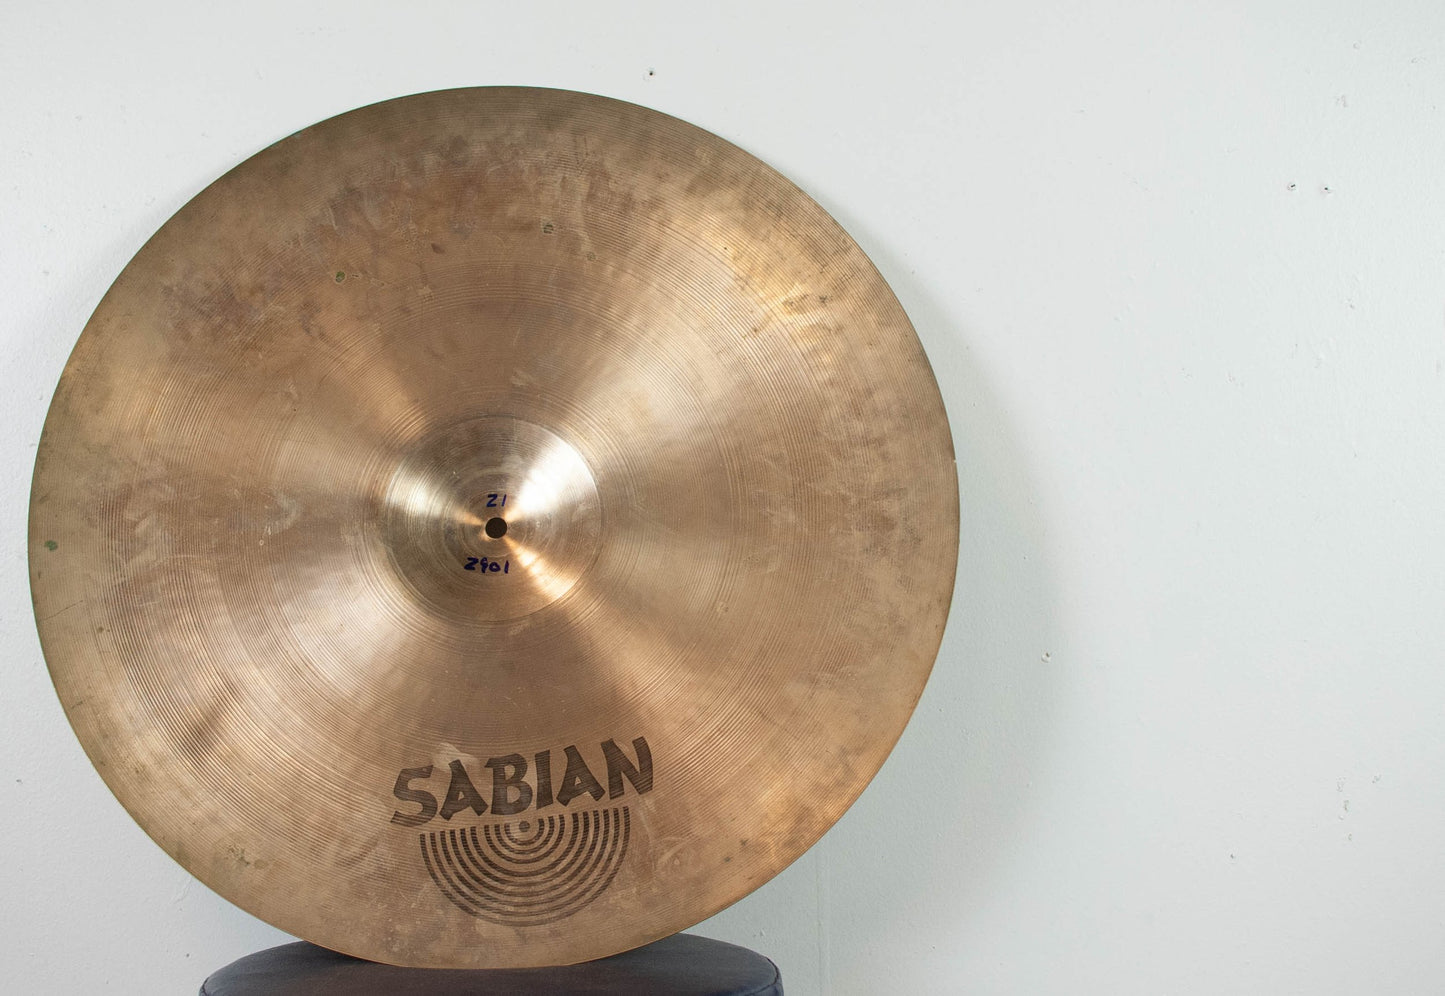 Sabian 21" AAX Stage Ride Cymbal 2901g